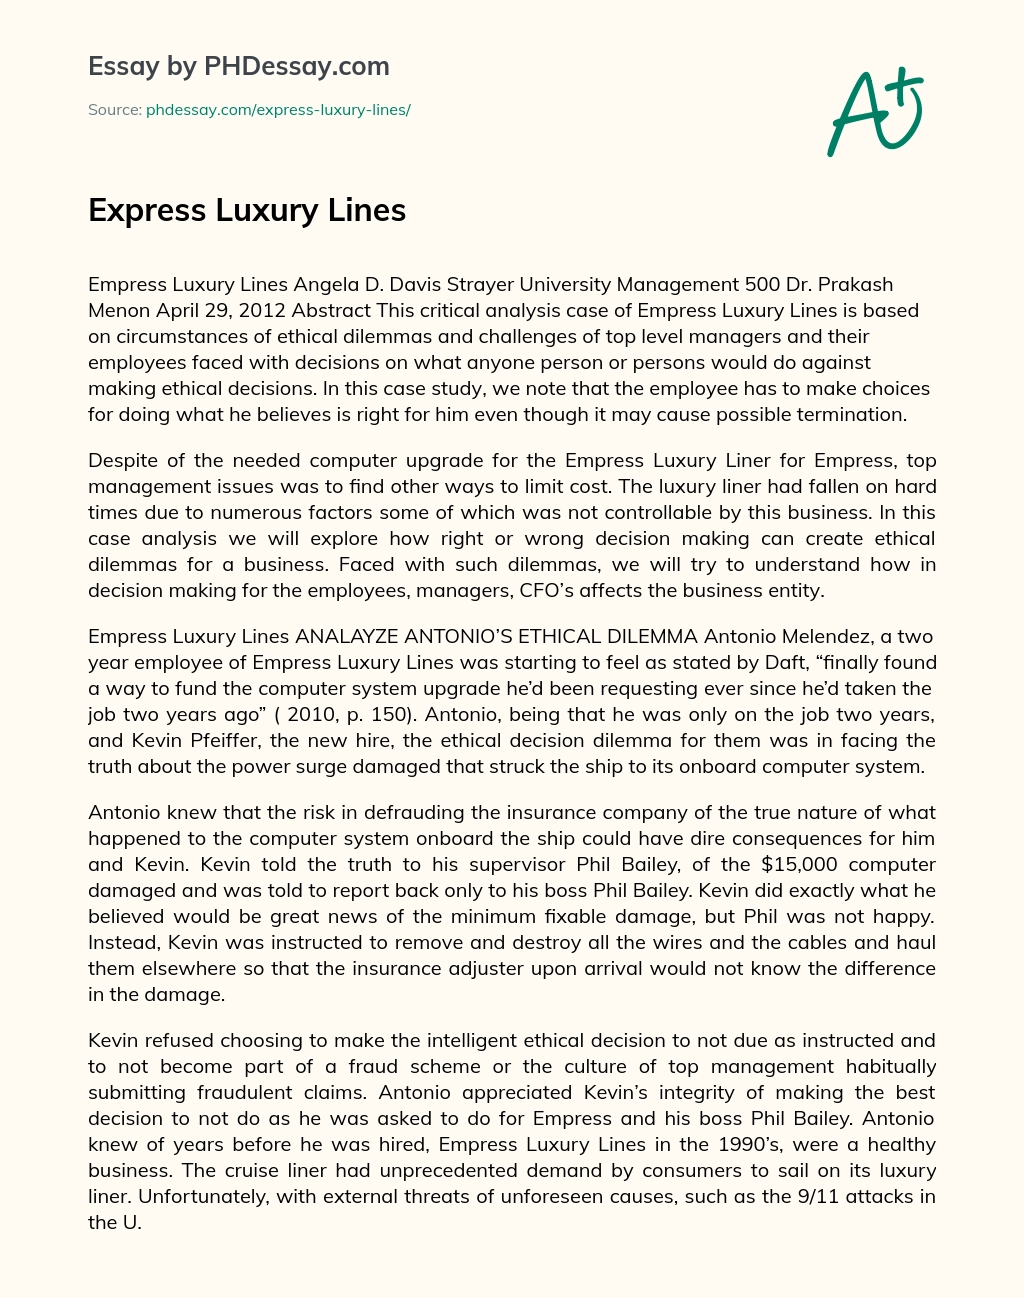 Express Luxury Lines essay